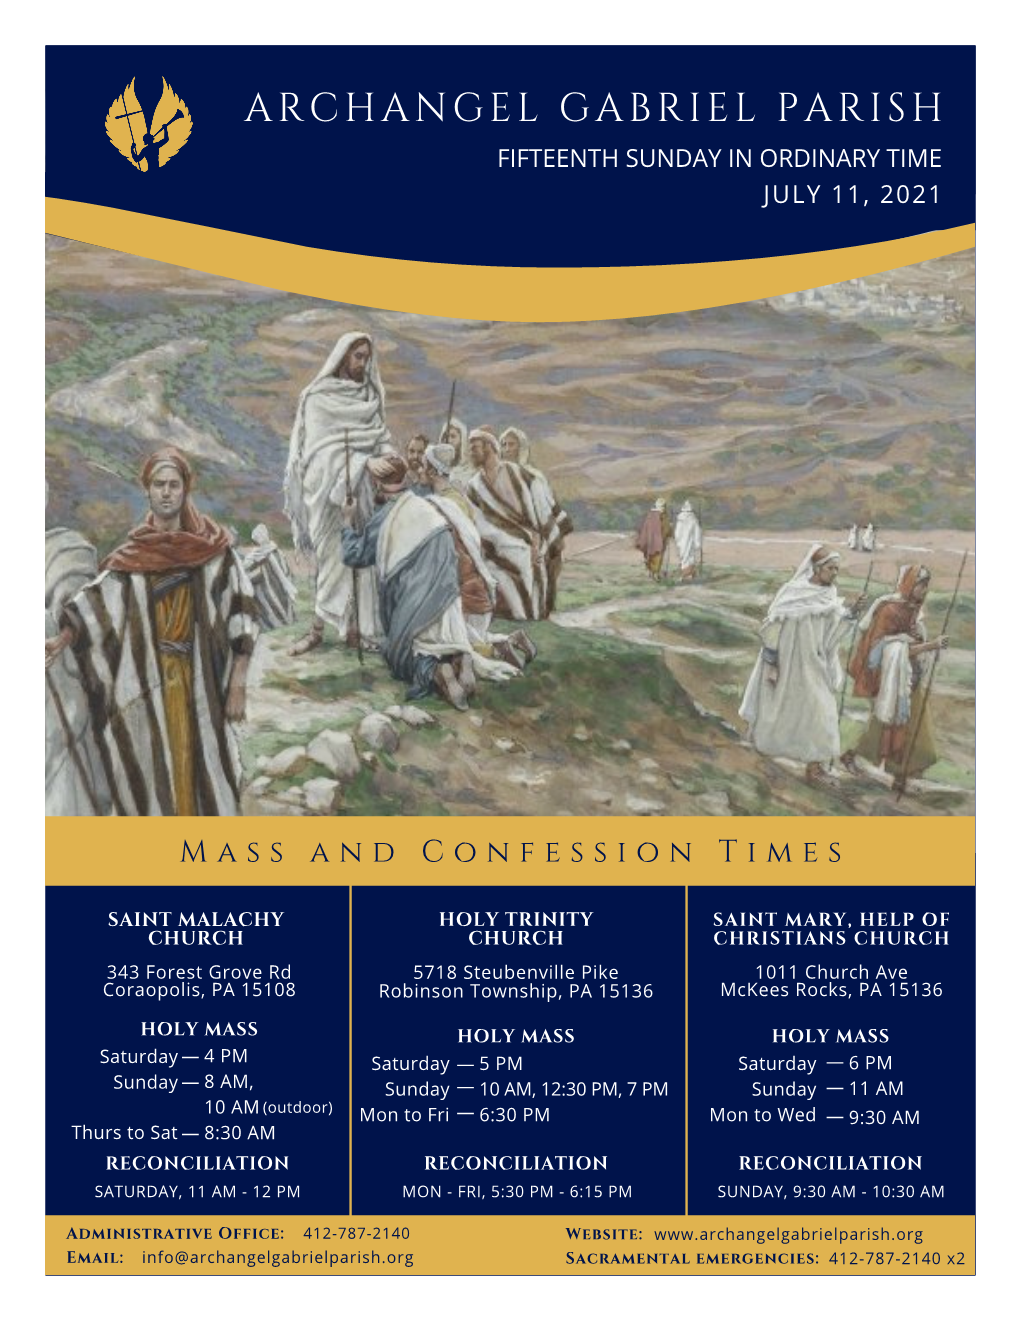 Archangel Gabriel Parish Fifteenth Sunday in Ordinary Time July 11, 2021